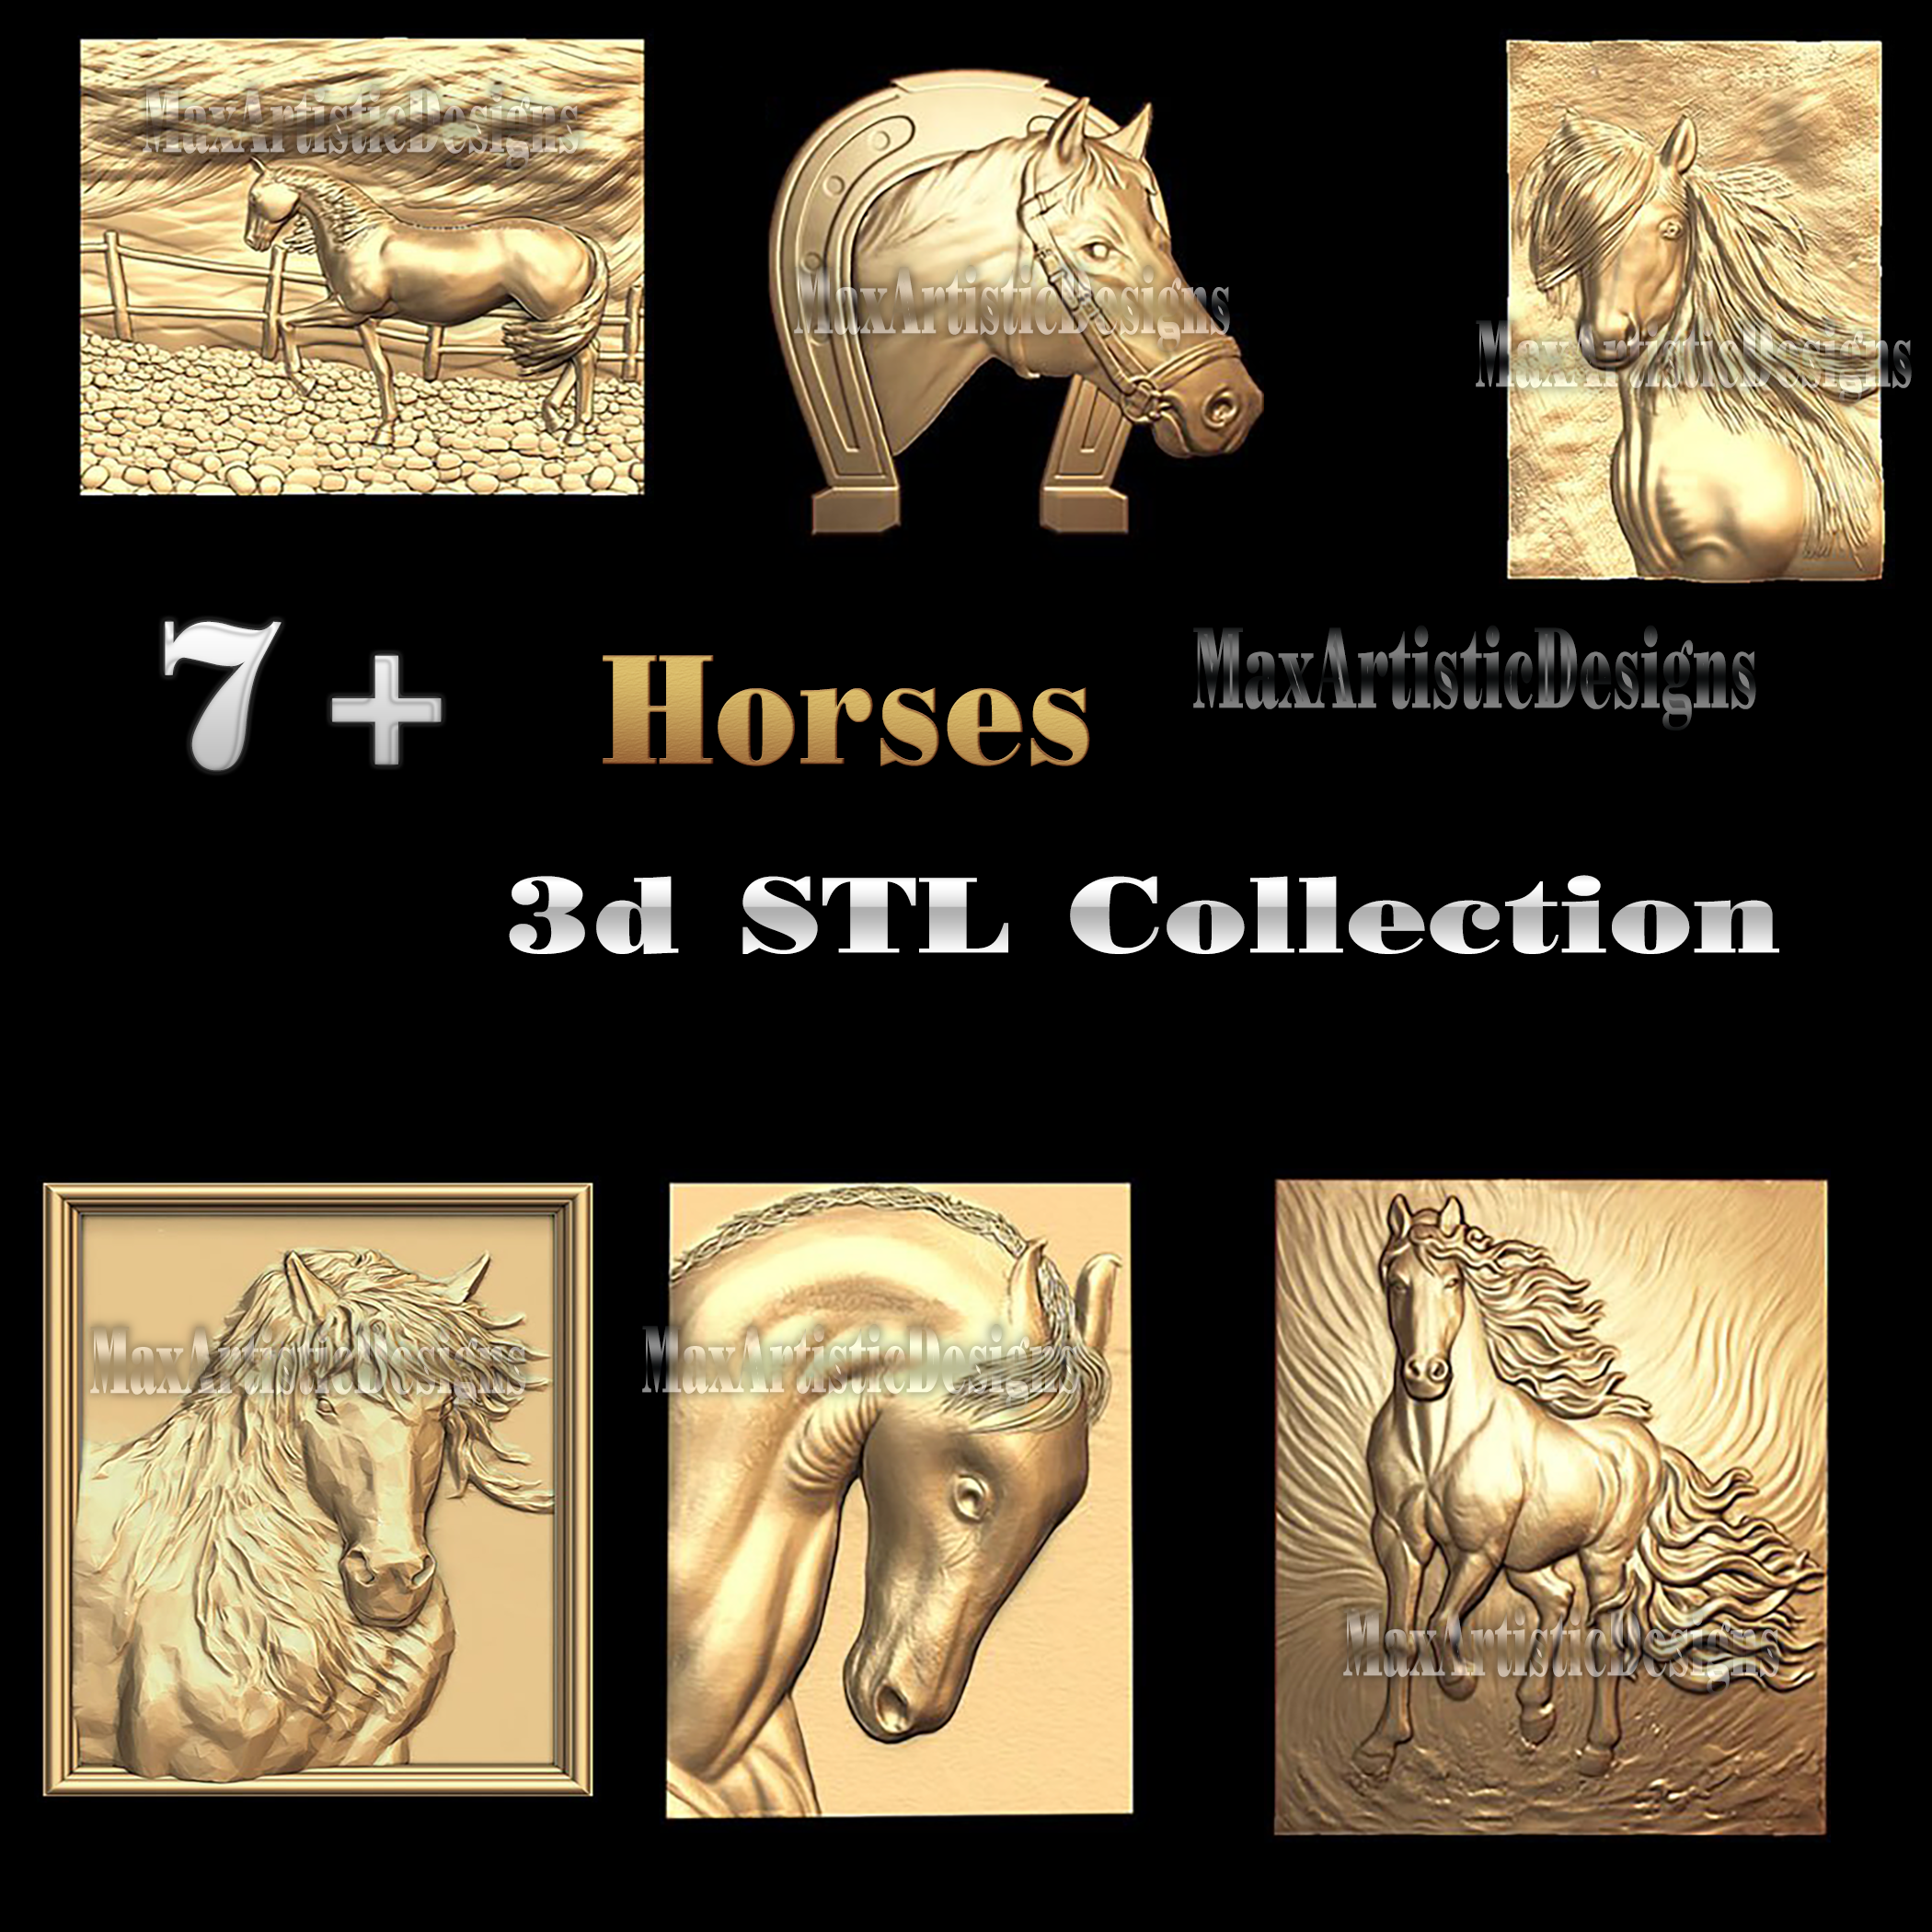 8+ stl horse models bas relief in wood 3d stl file for cnc routers 3d printer artcam aspire digital download